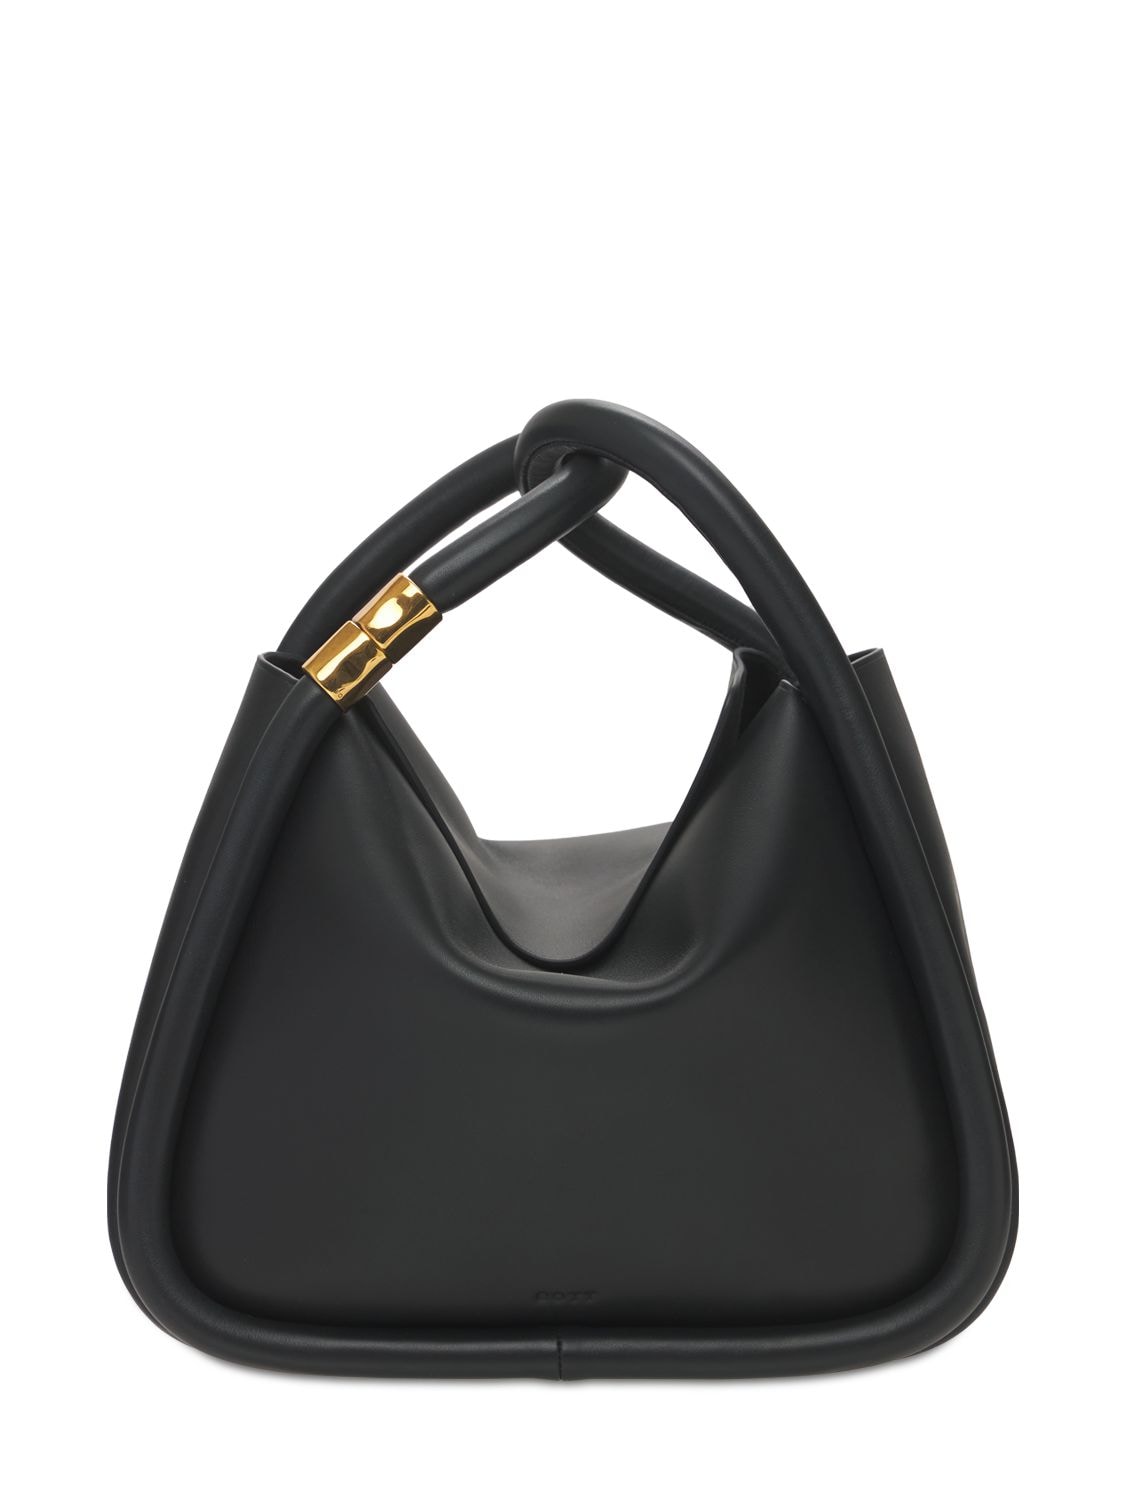 Boyy - Wonton 25 leather top handle bag - Black | Luisaviaroma